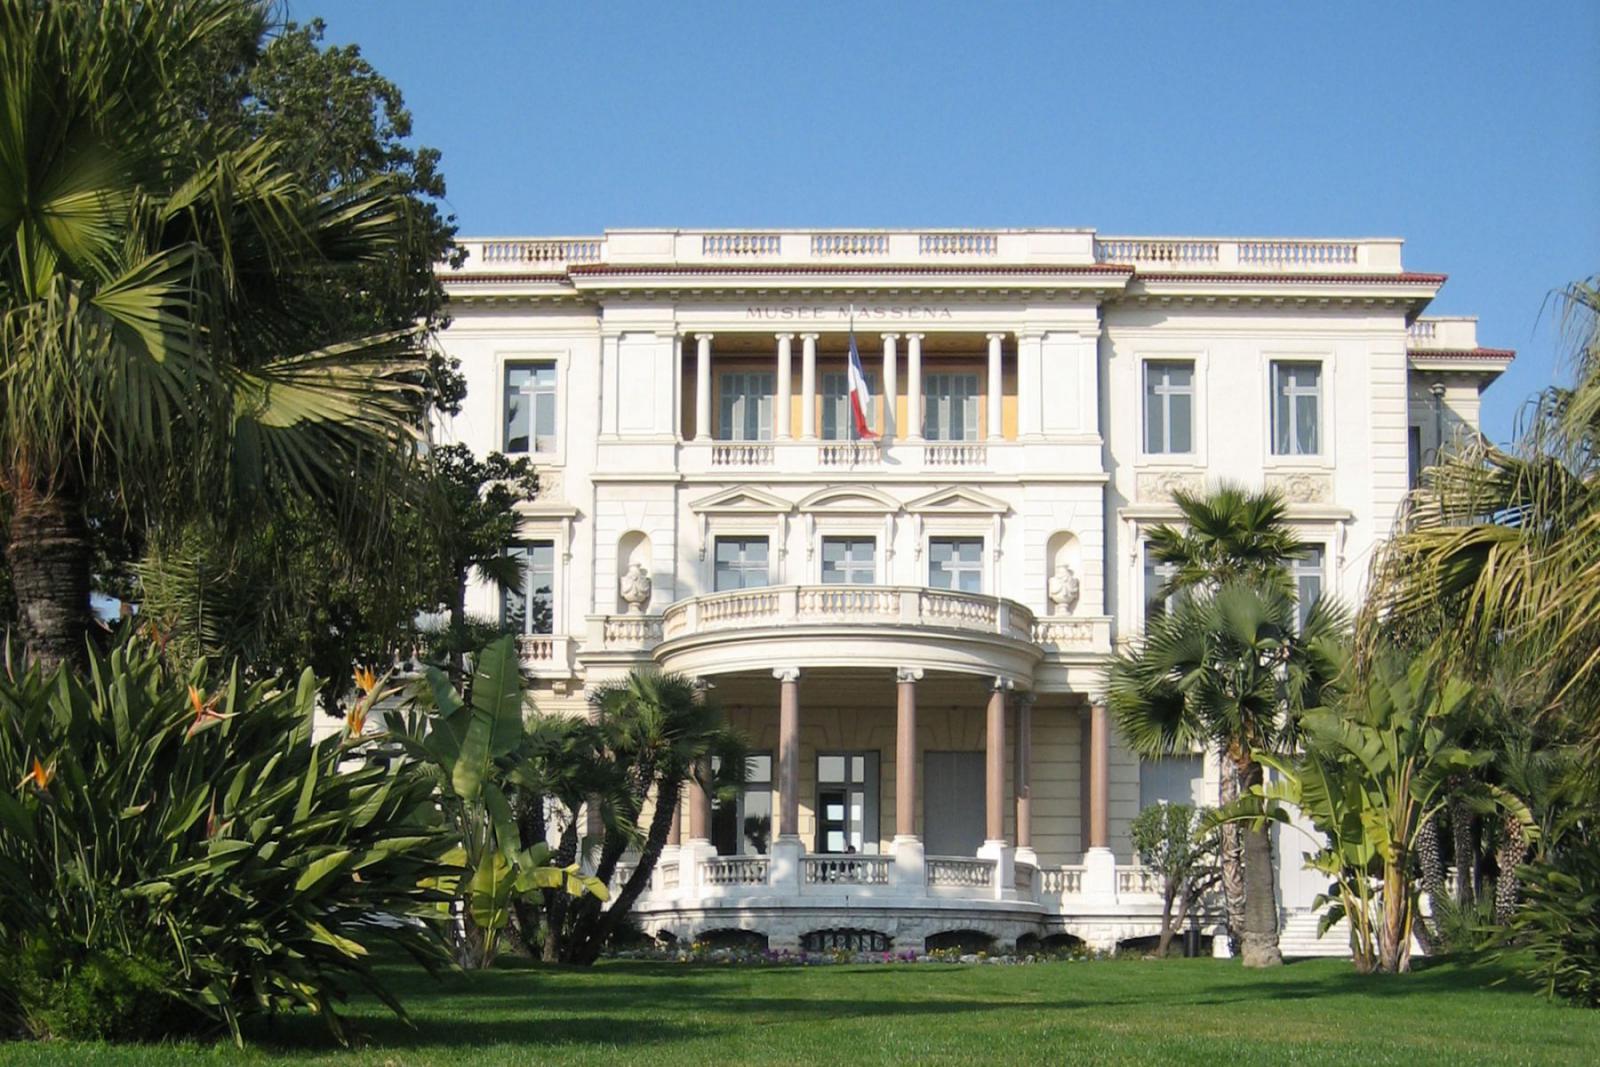 Musée Masséna vlakbij de Promenade des Anglais in Nice